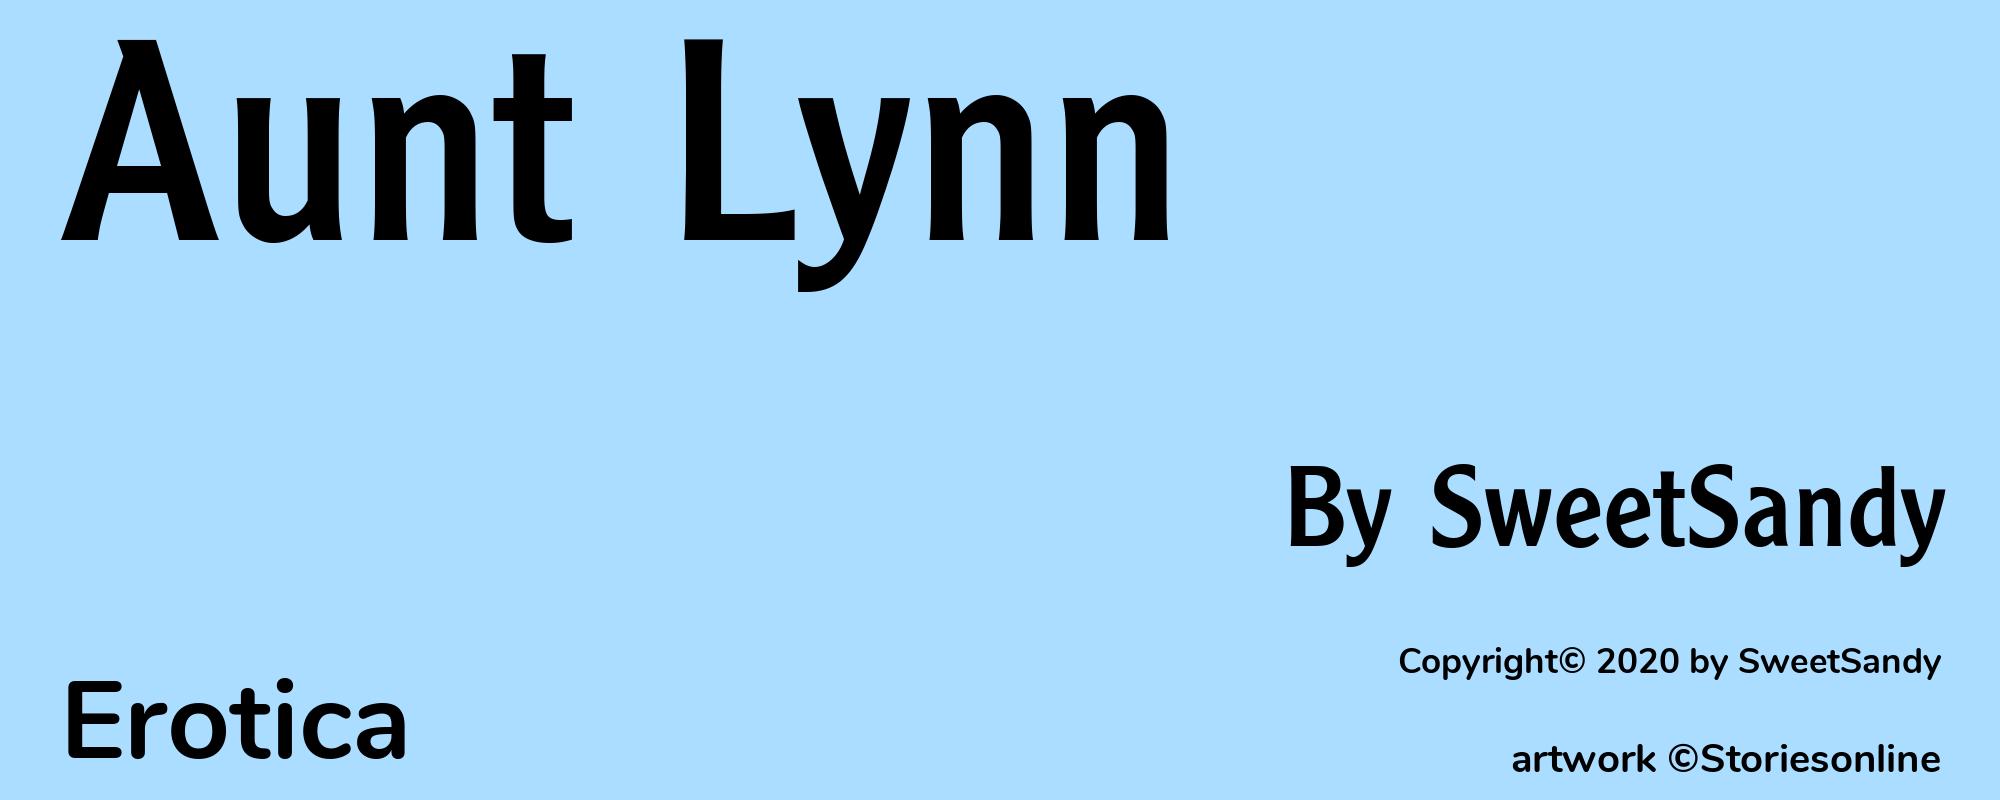 Aunt Lynn - Cover